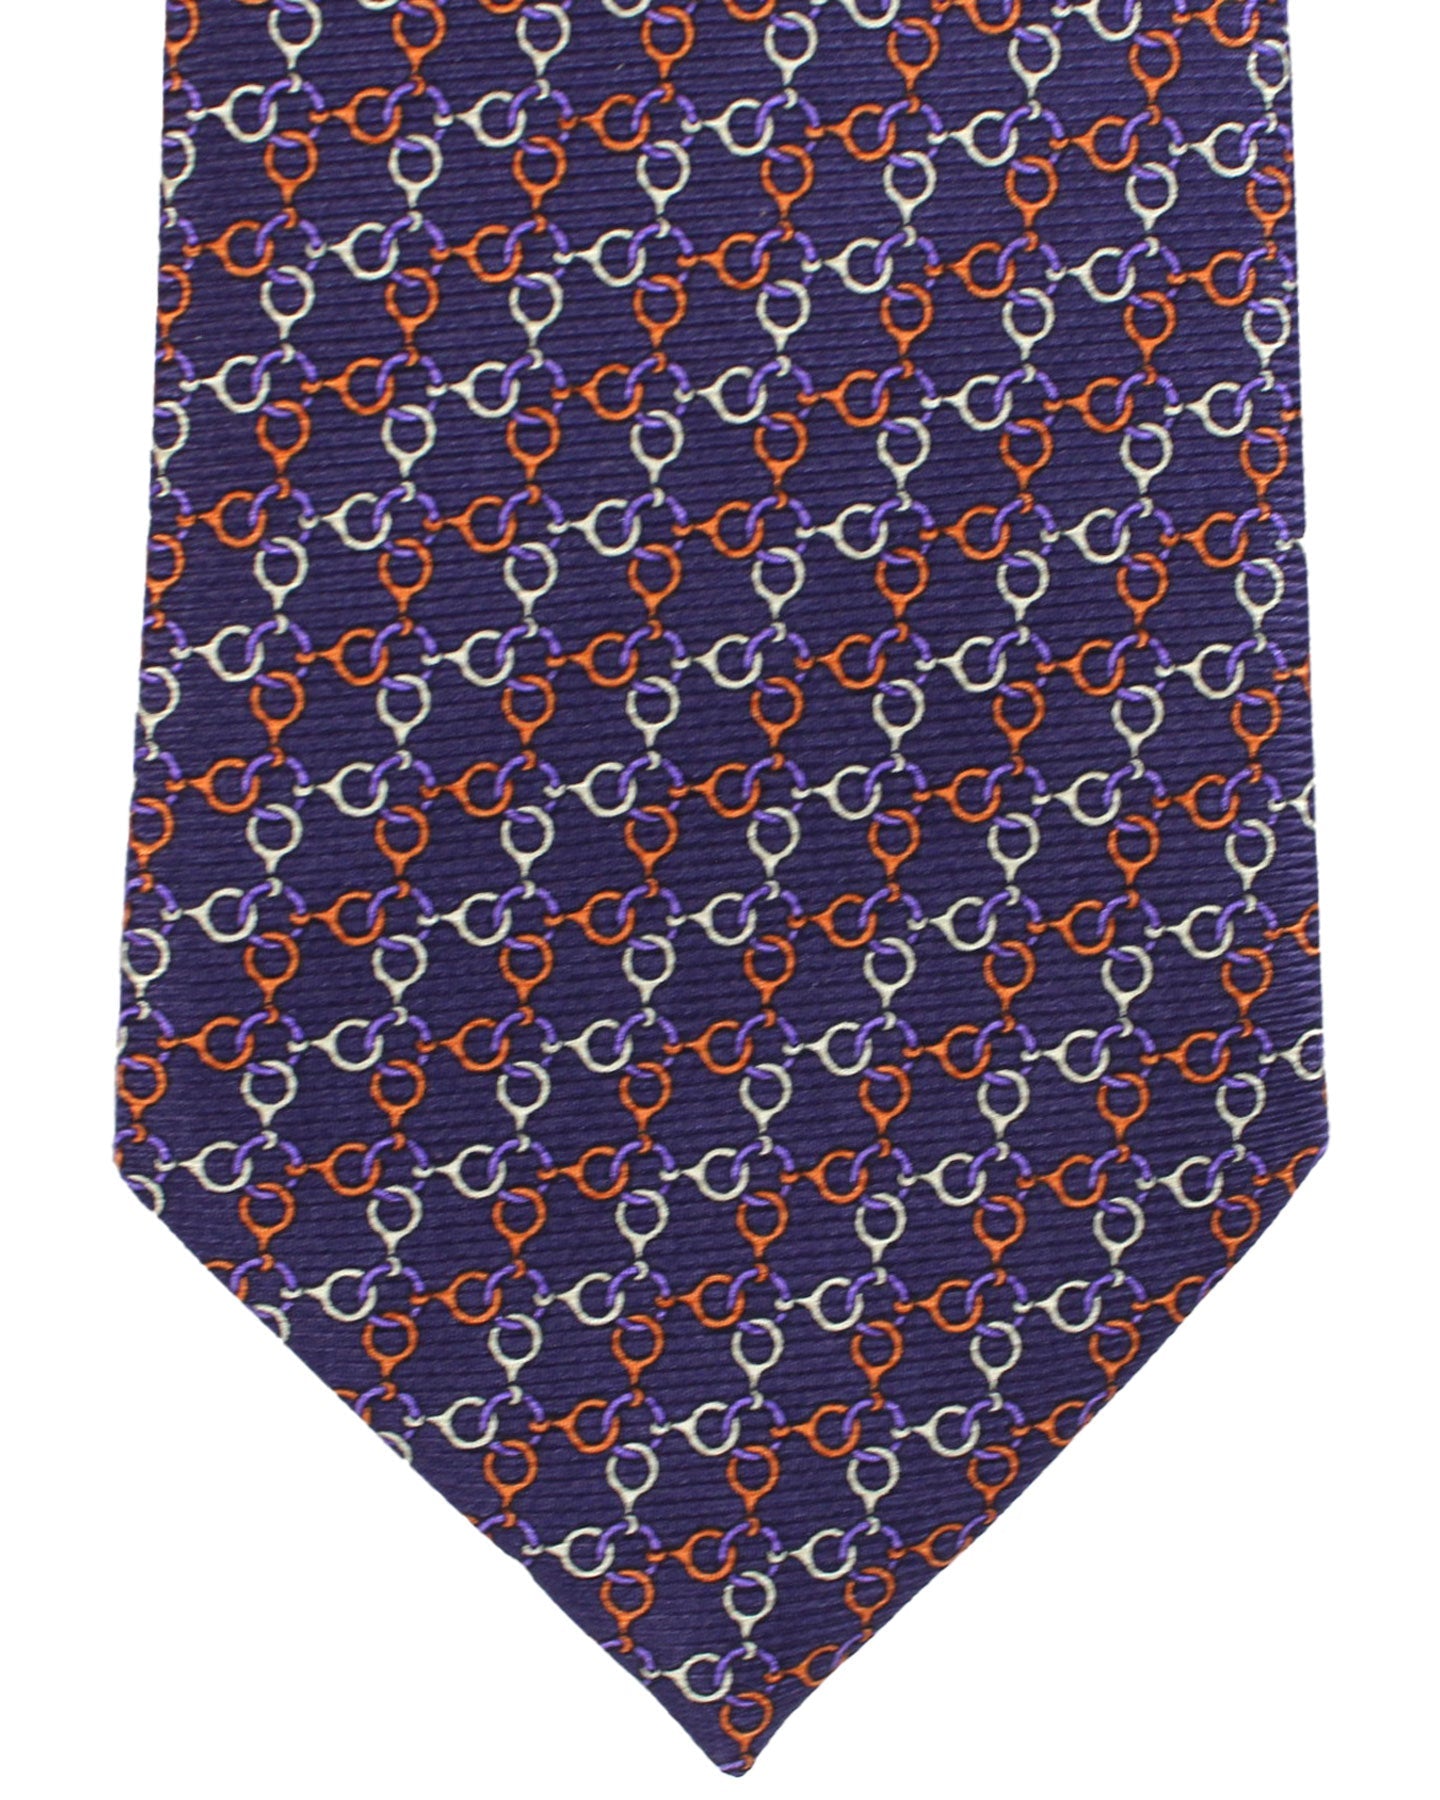 Ermenegildo Zegna Silk Tie Purple Orange White Geometric - Hand Made in Italy